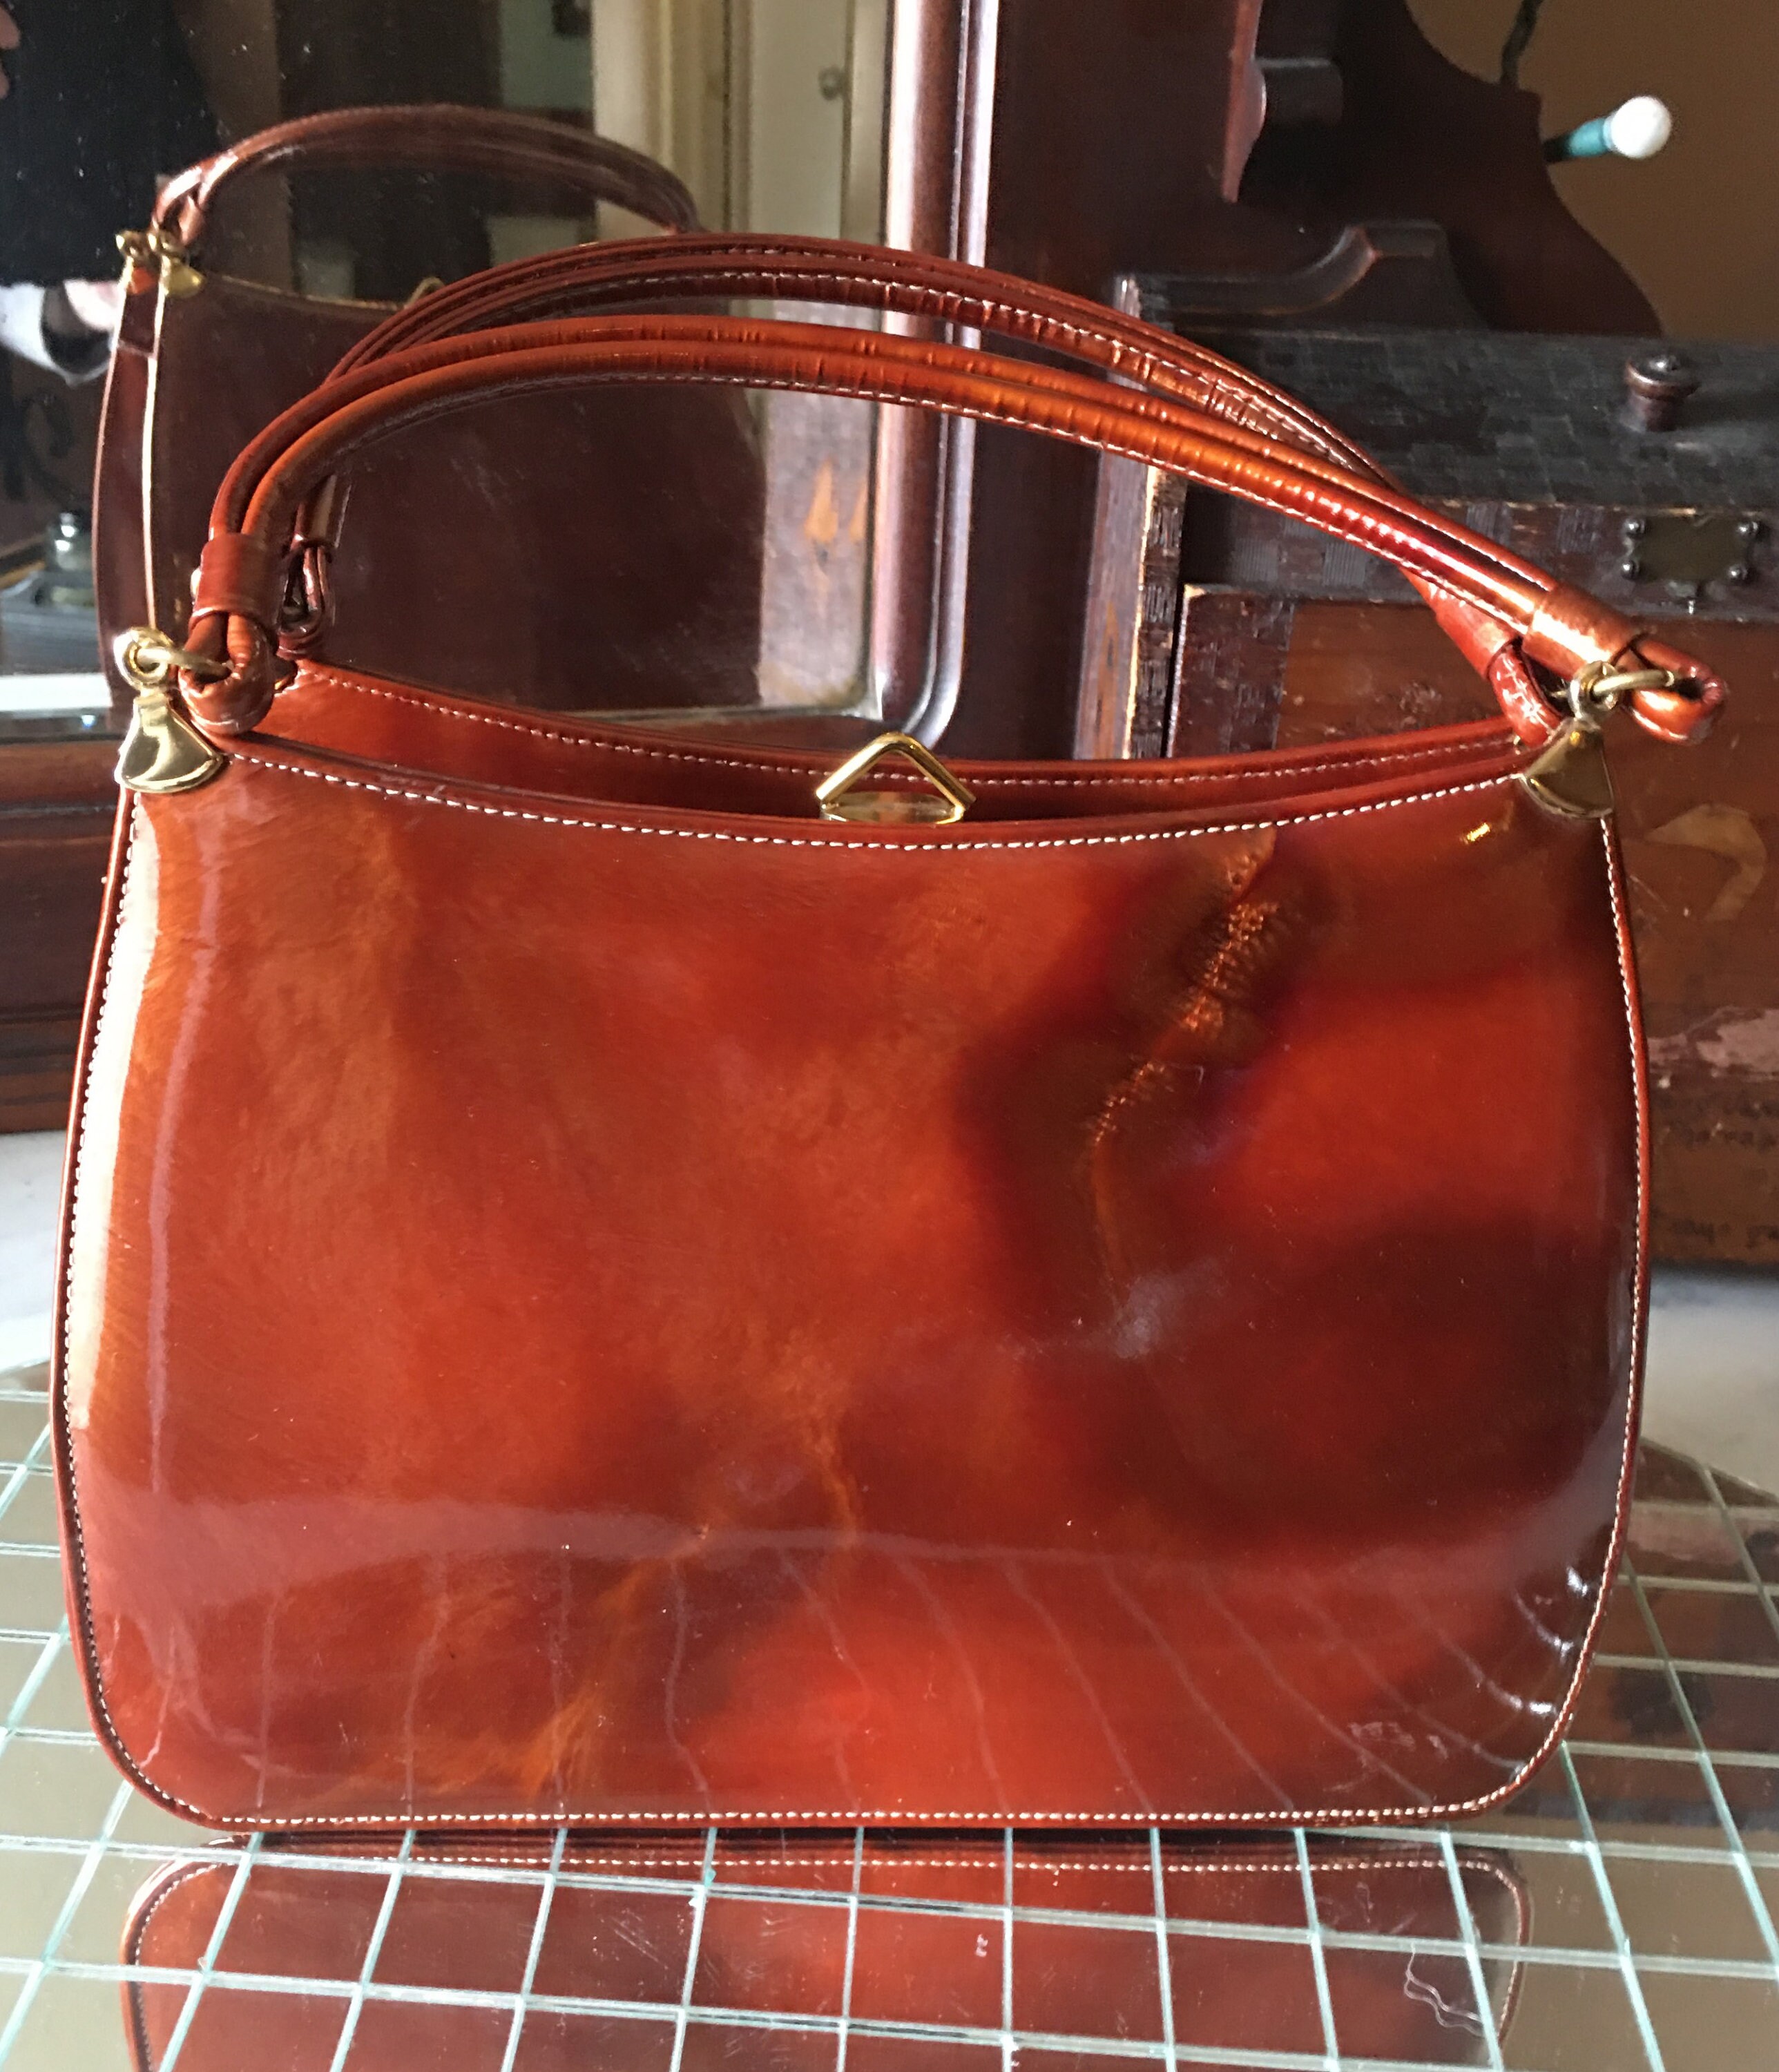 MINI SORBONNE Burgundy patent leather bag